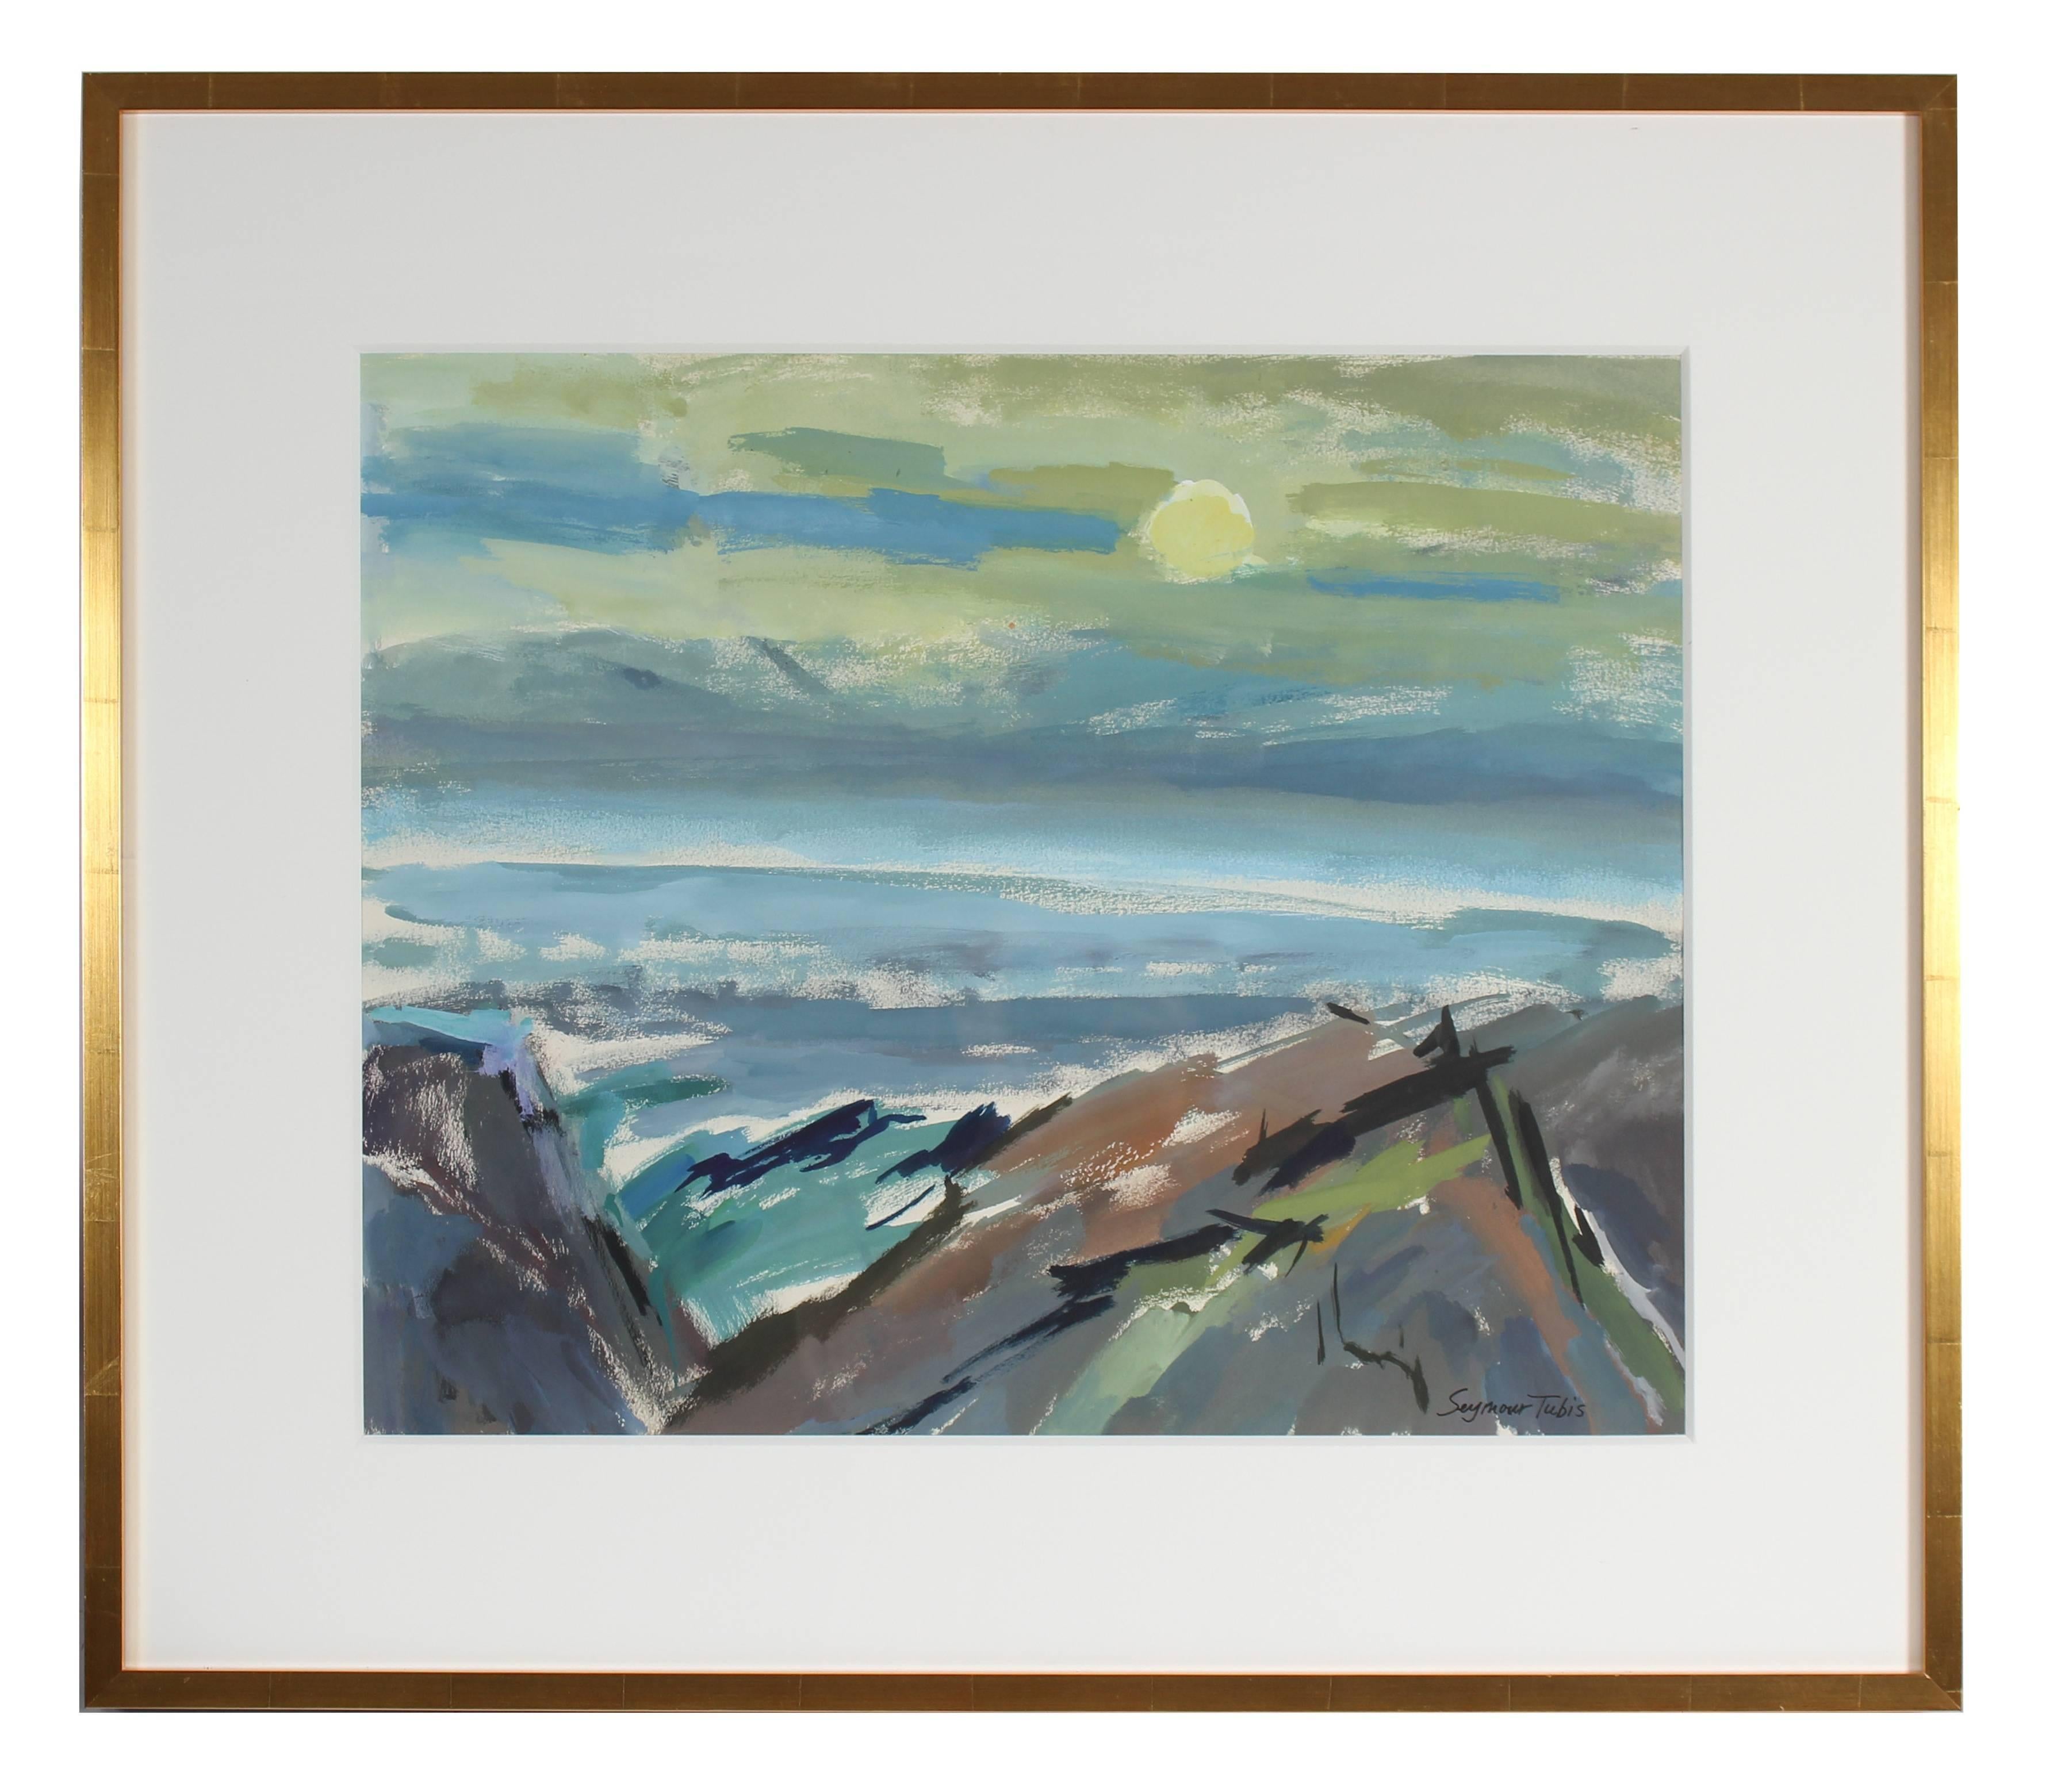 Seymour Tubis Landscape Painting - "Monhegan Morning" Landscape in Acrylic Paint, Circa 1960s